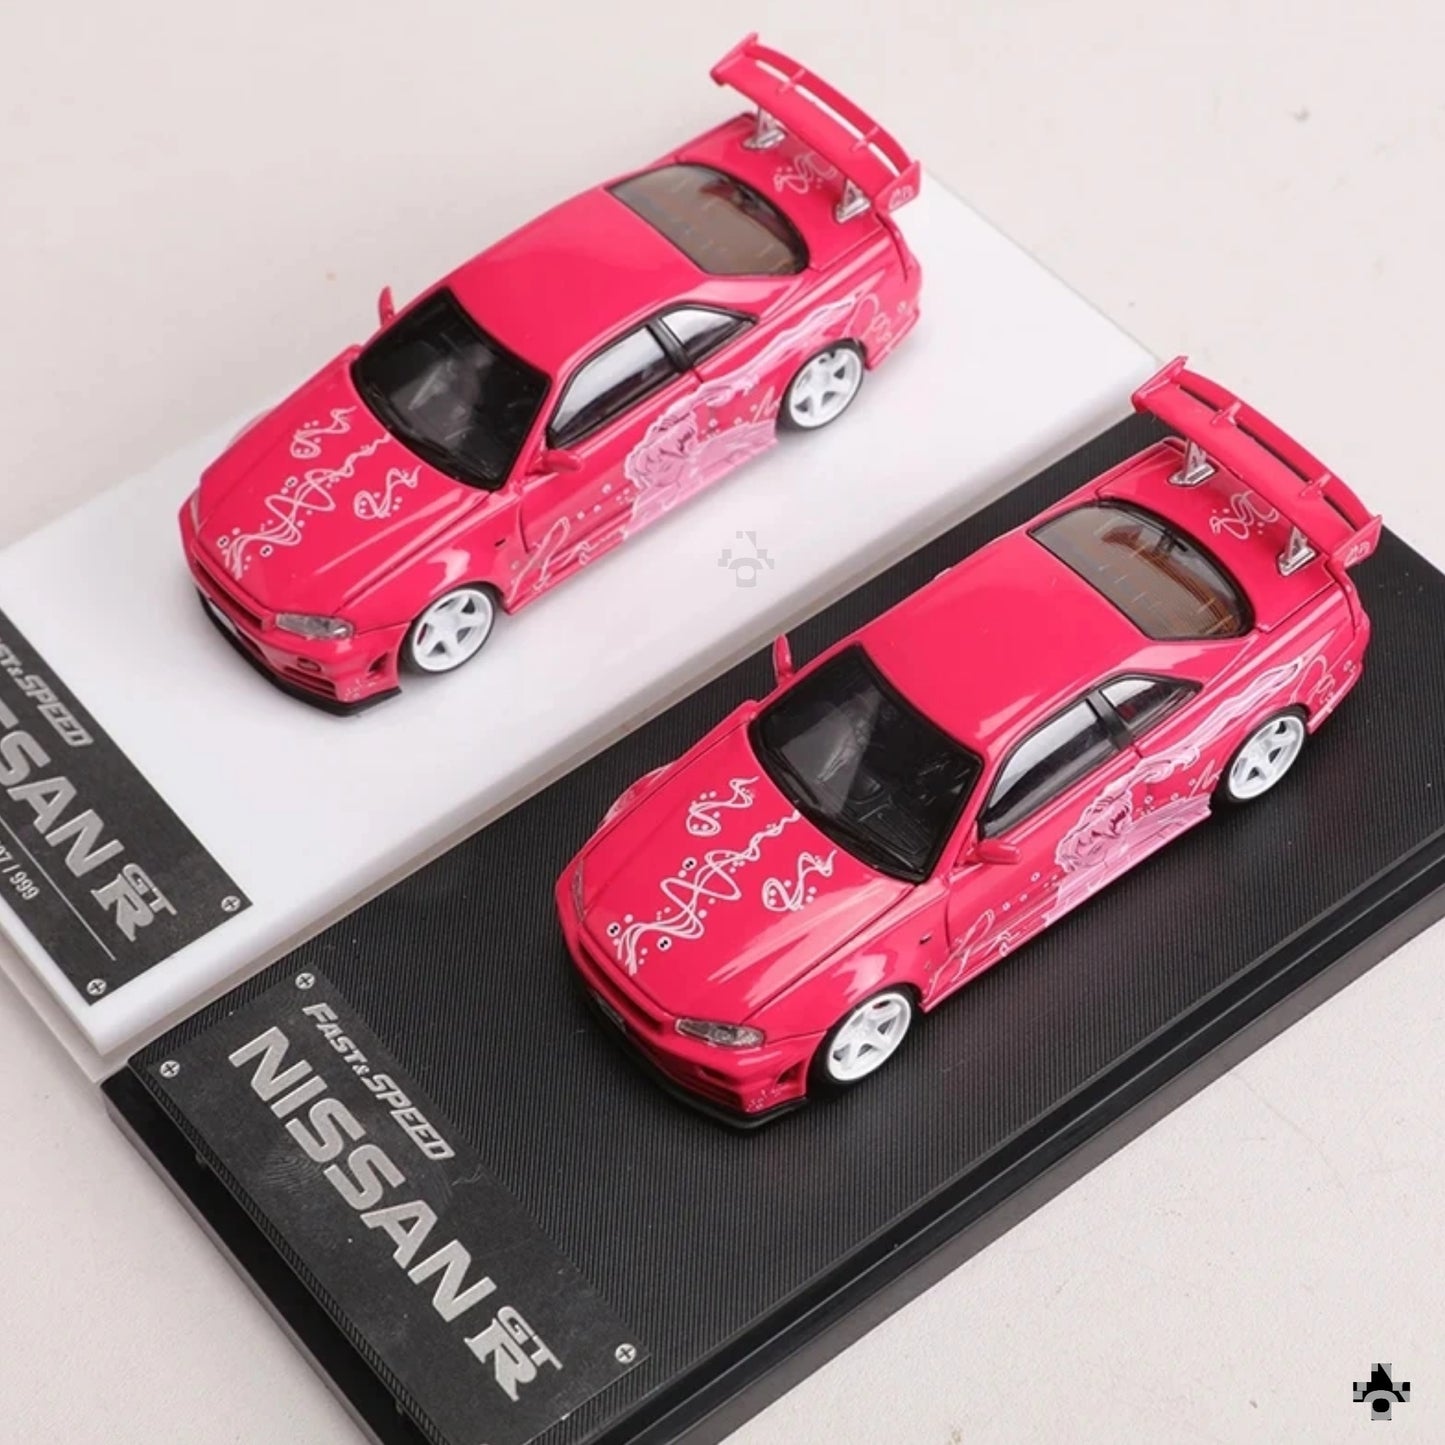 Fast Speed Skyline GT-R R34 High Wing Suki Pink